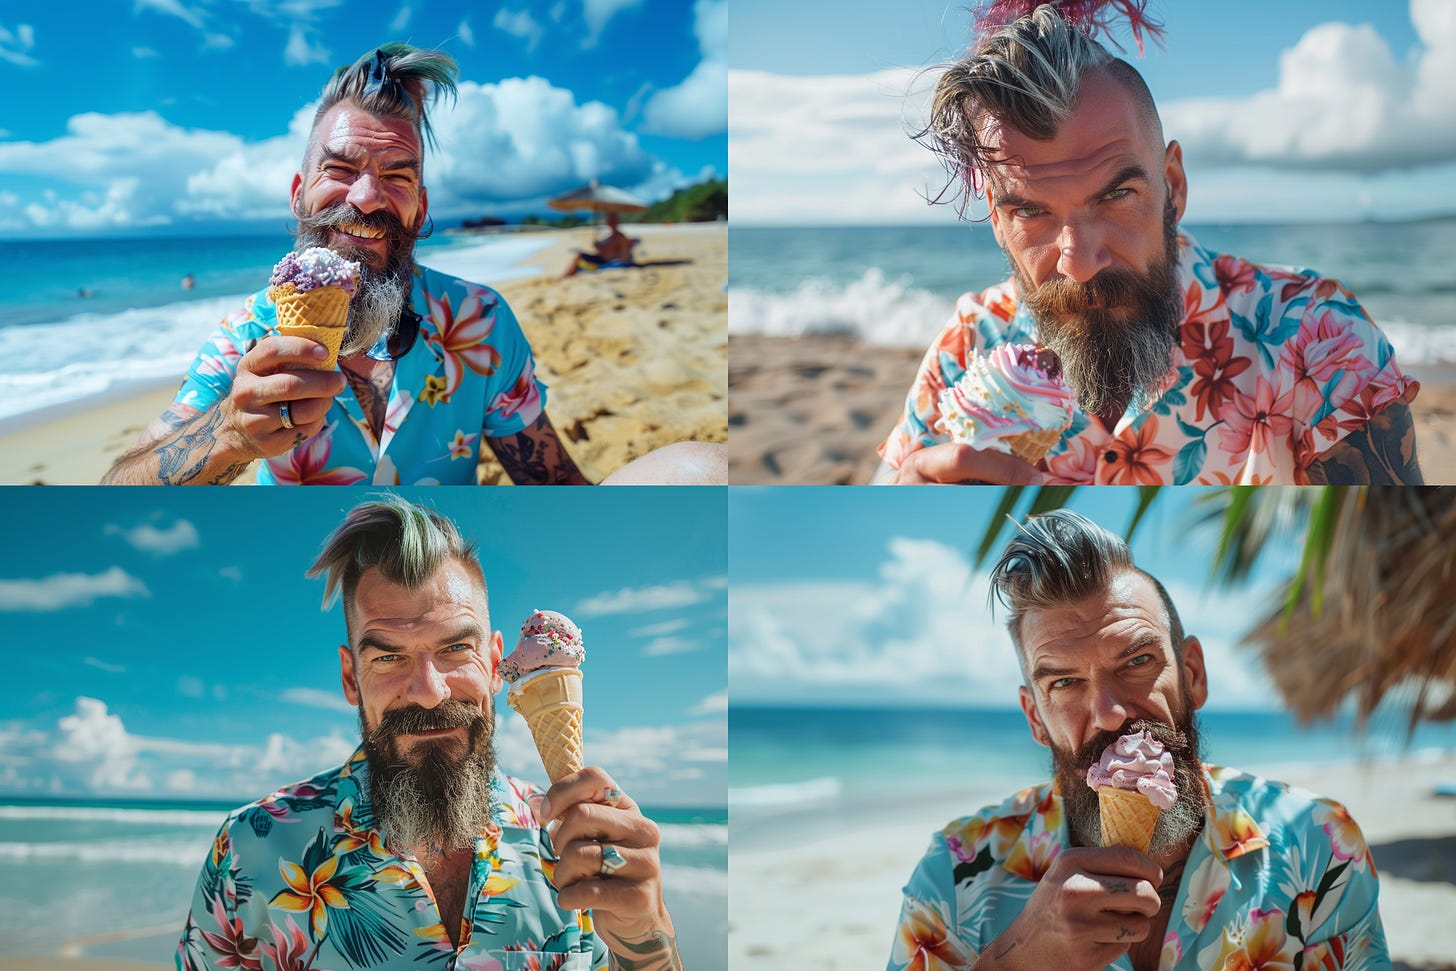 Viking eating ice cream on the beach in a Hawaiian floral shirt